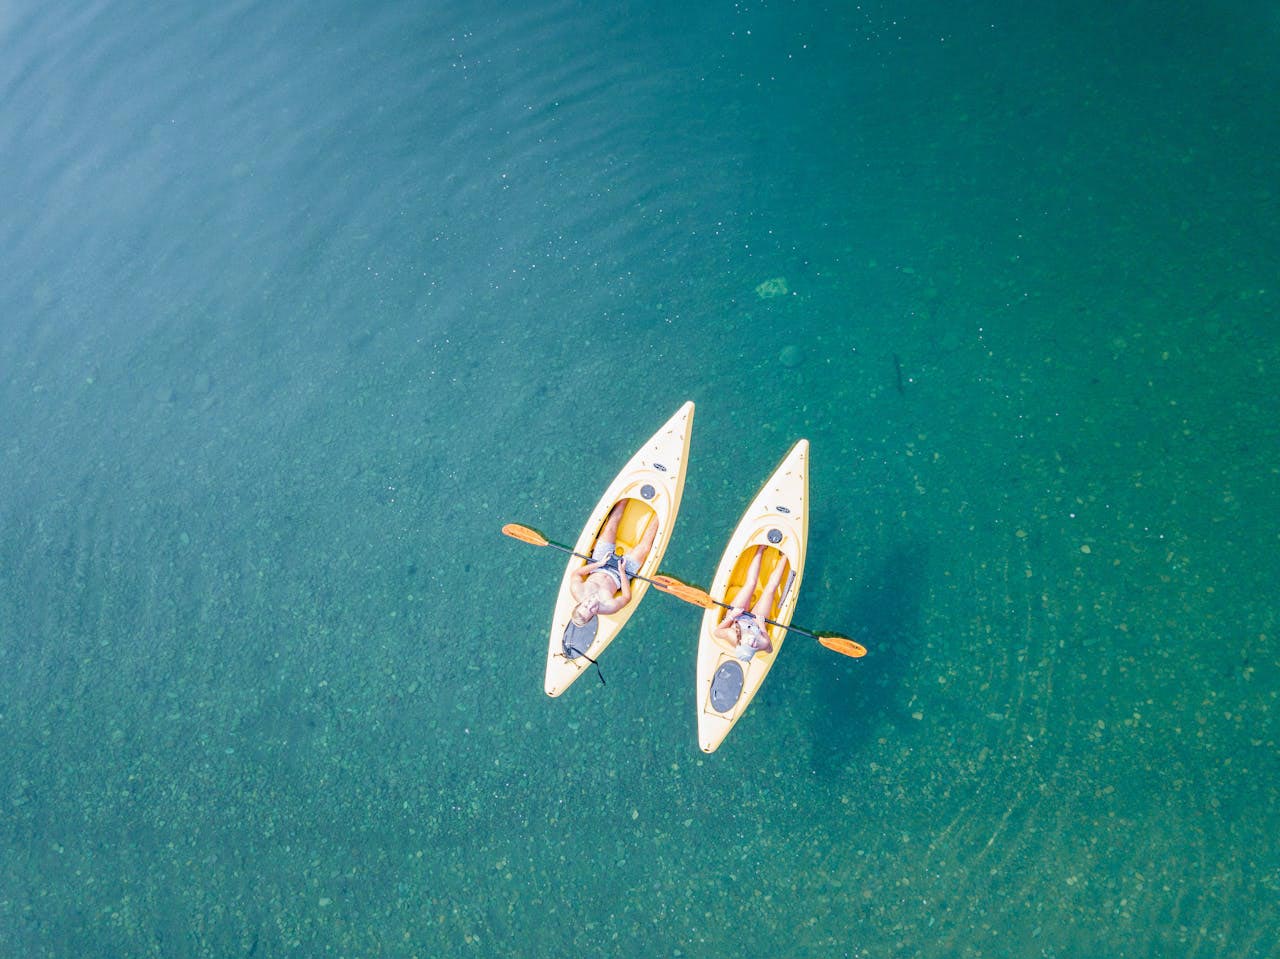 San Diego Kayak Photography Tips